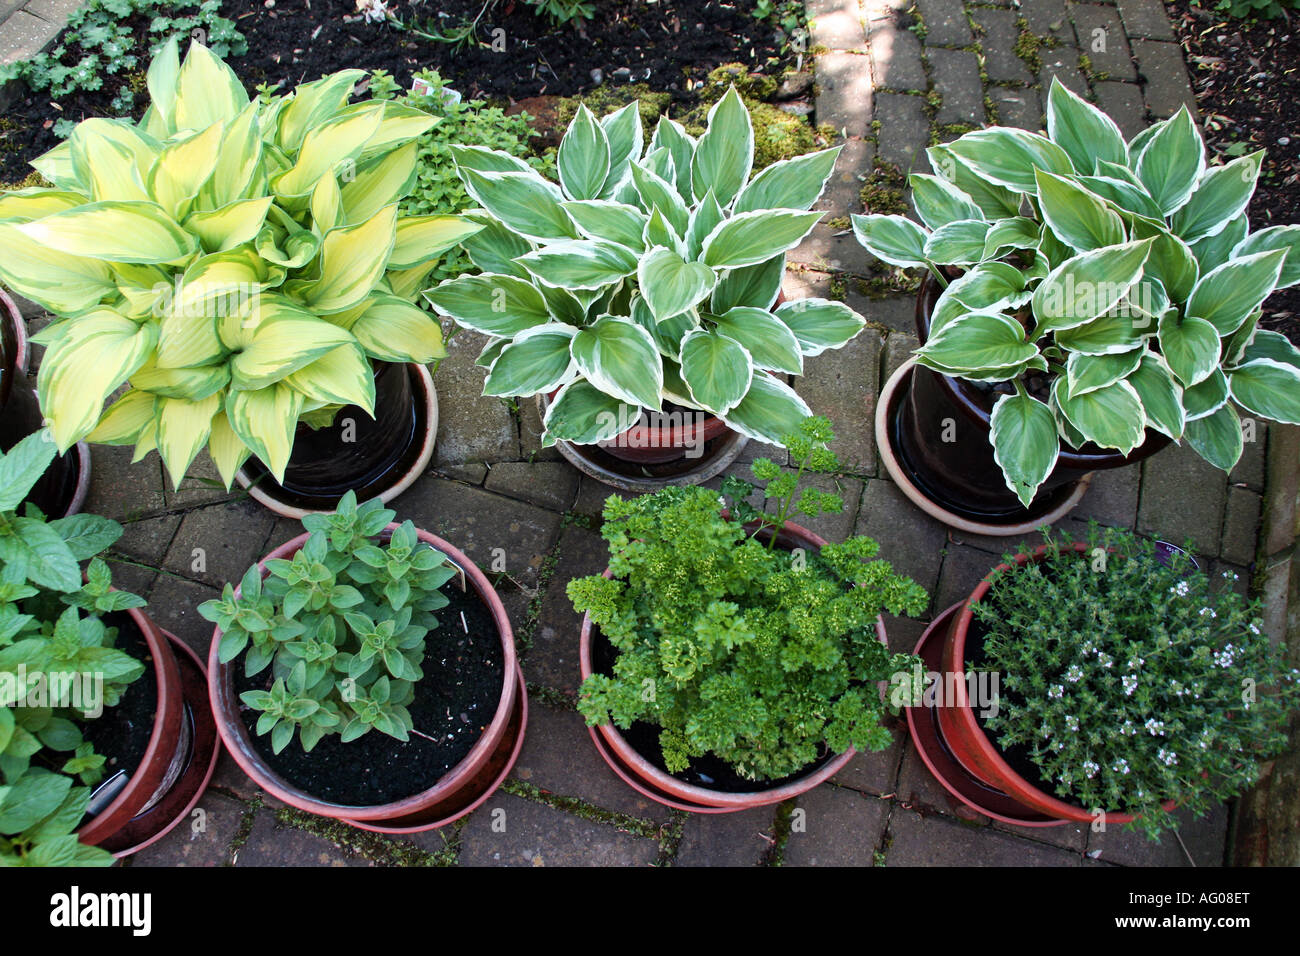 Young Hosta plants in clay garden pots Stock Photo